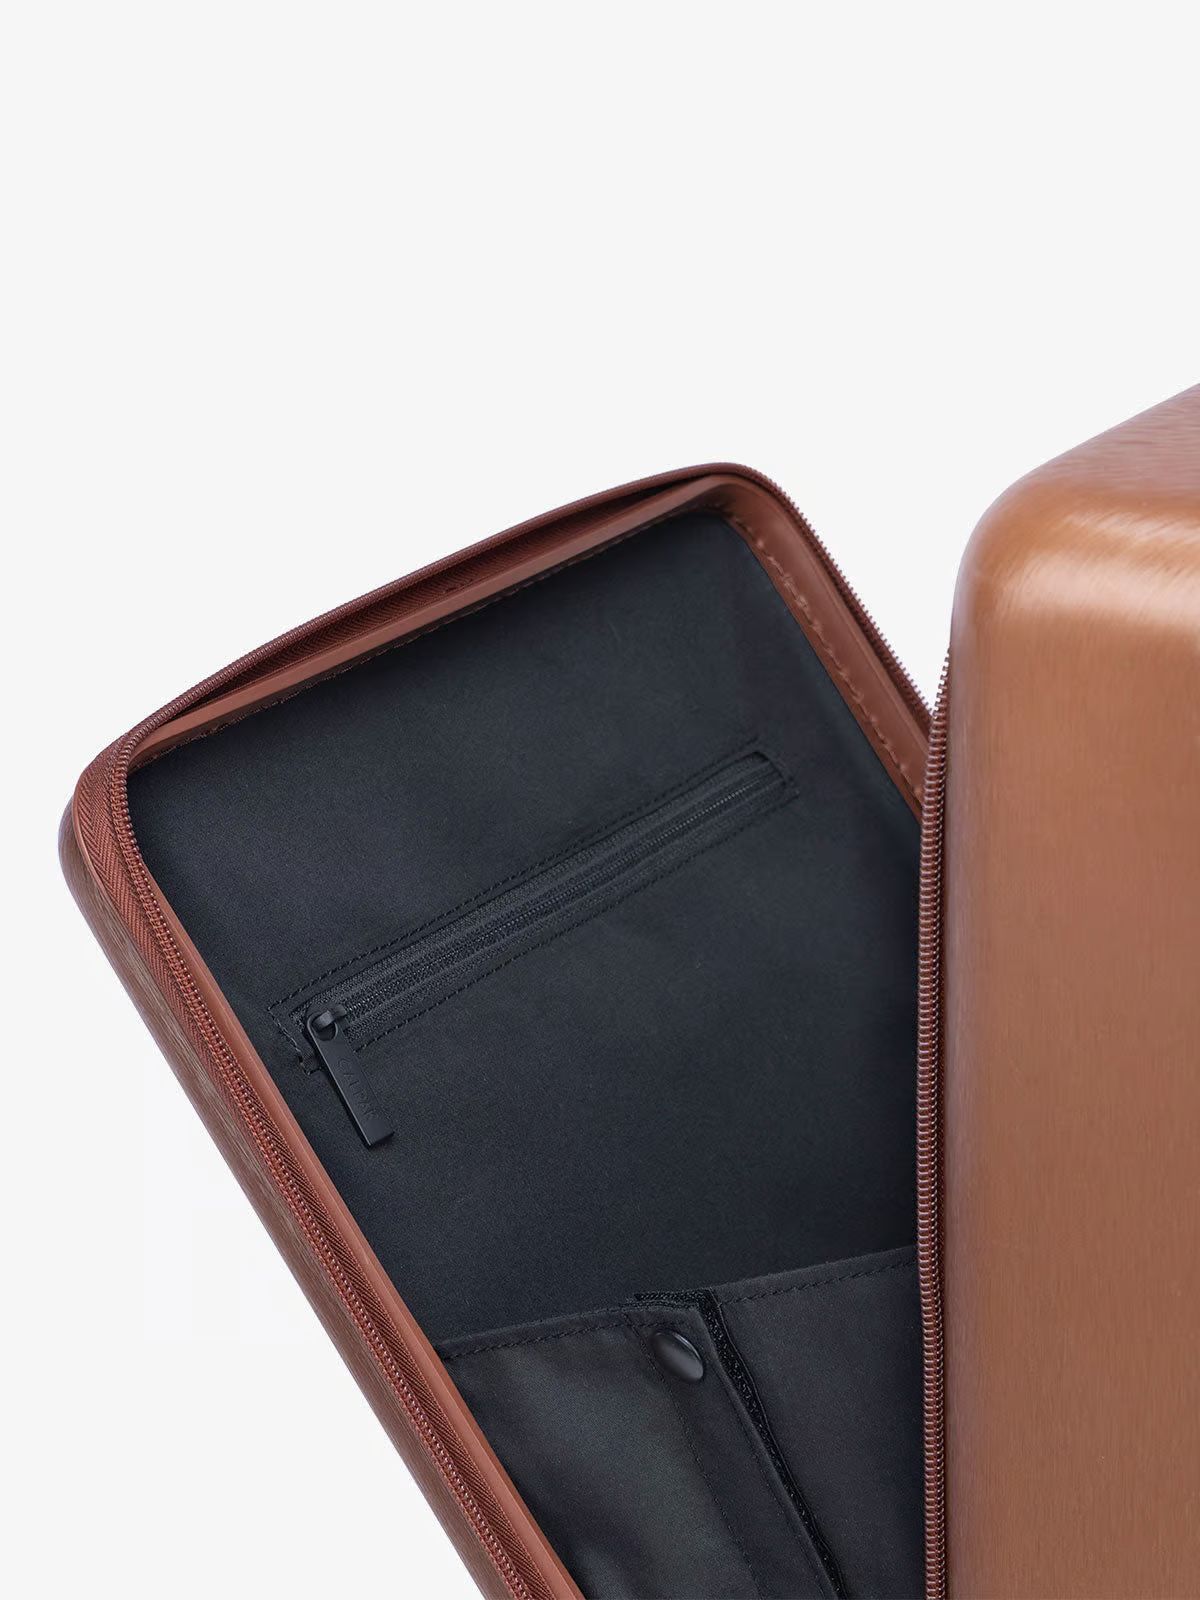 Ambeur Front Pocket Carry-On Luggage | CALPAK | CALPAK Travel